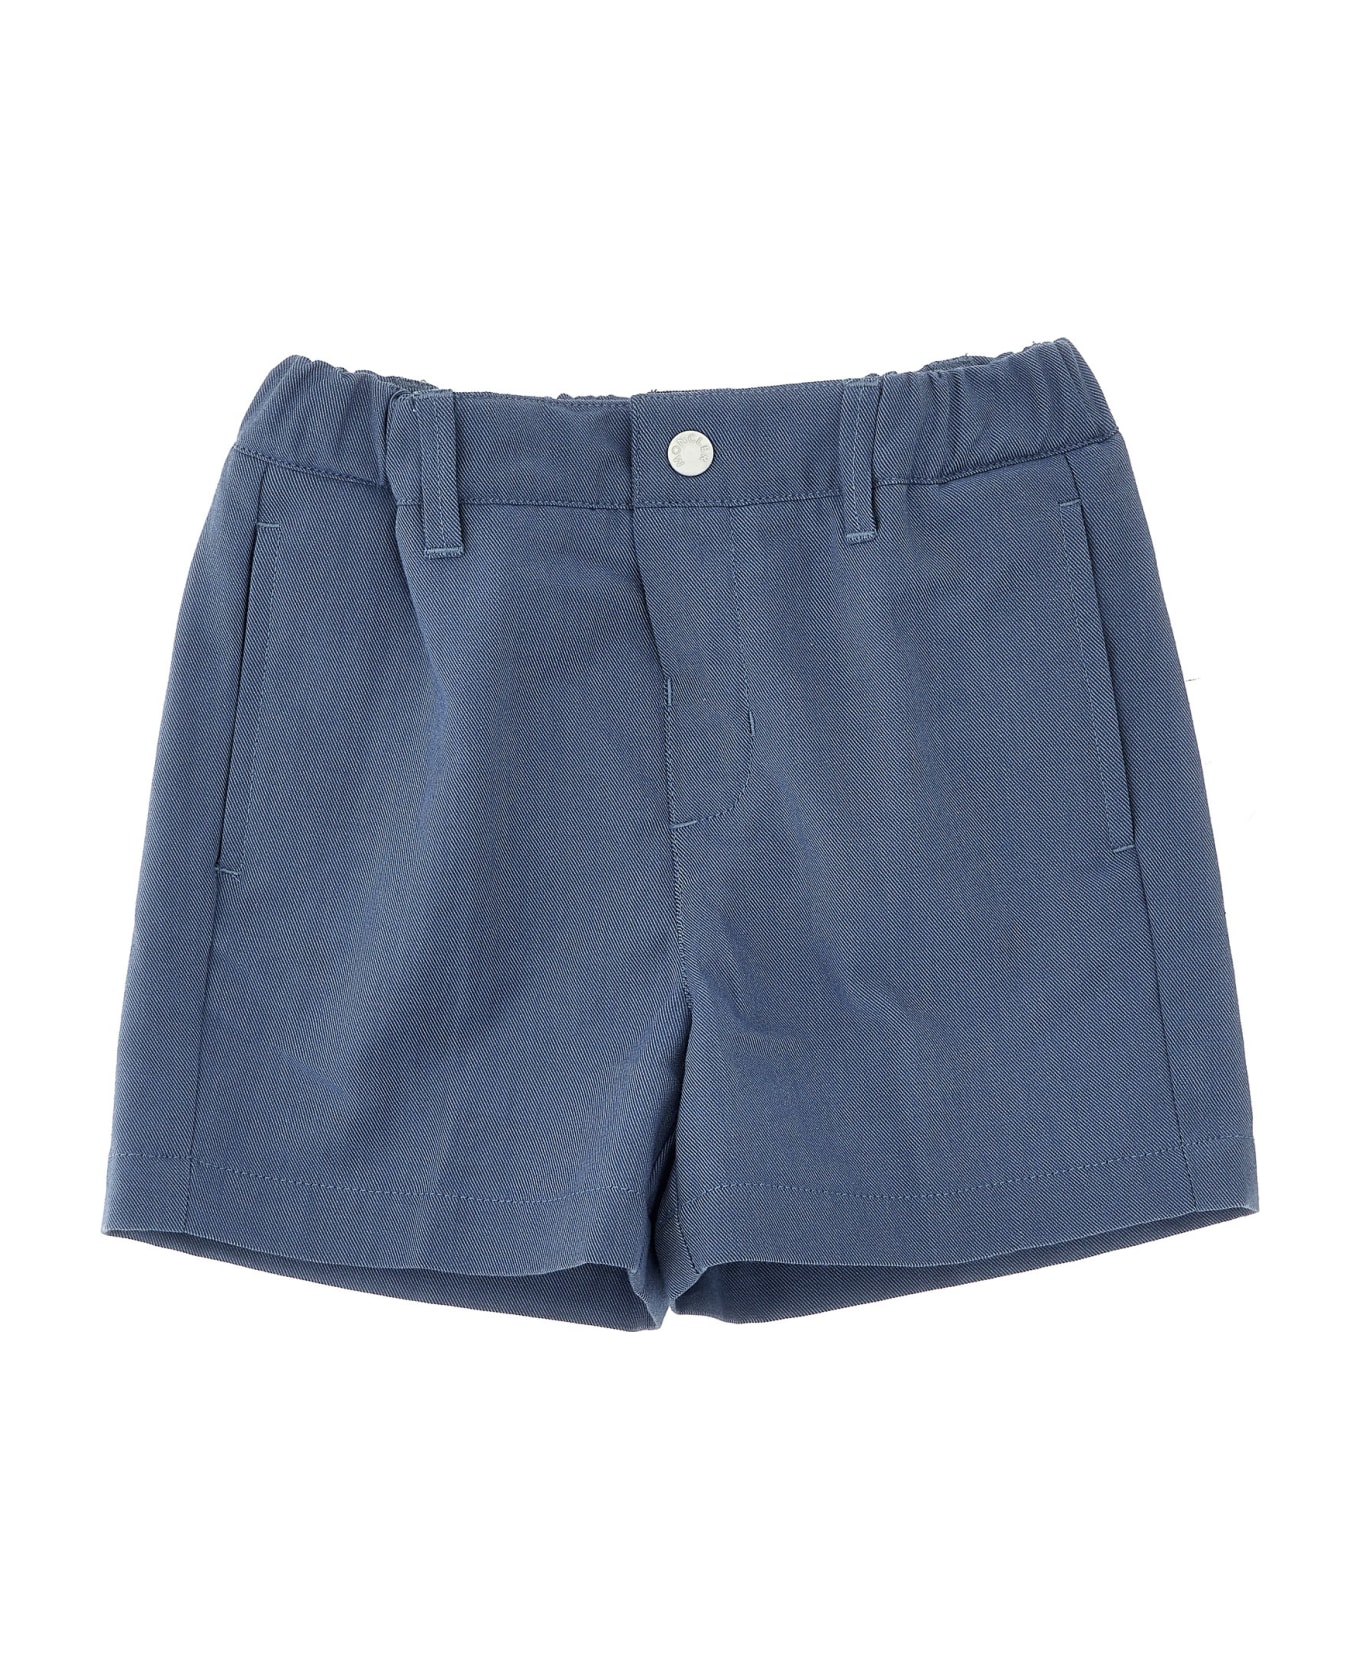 Moncler Chambray Shorts - Light Blue ボトムス